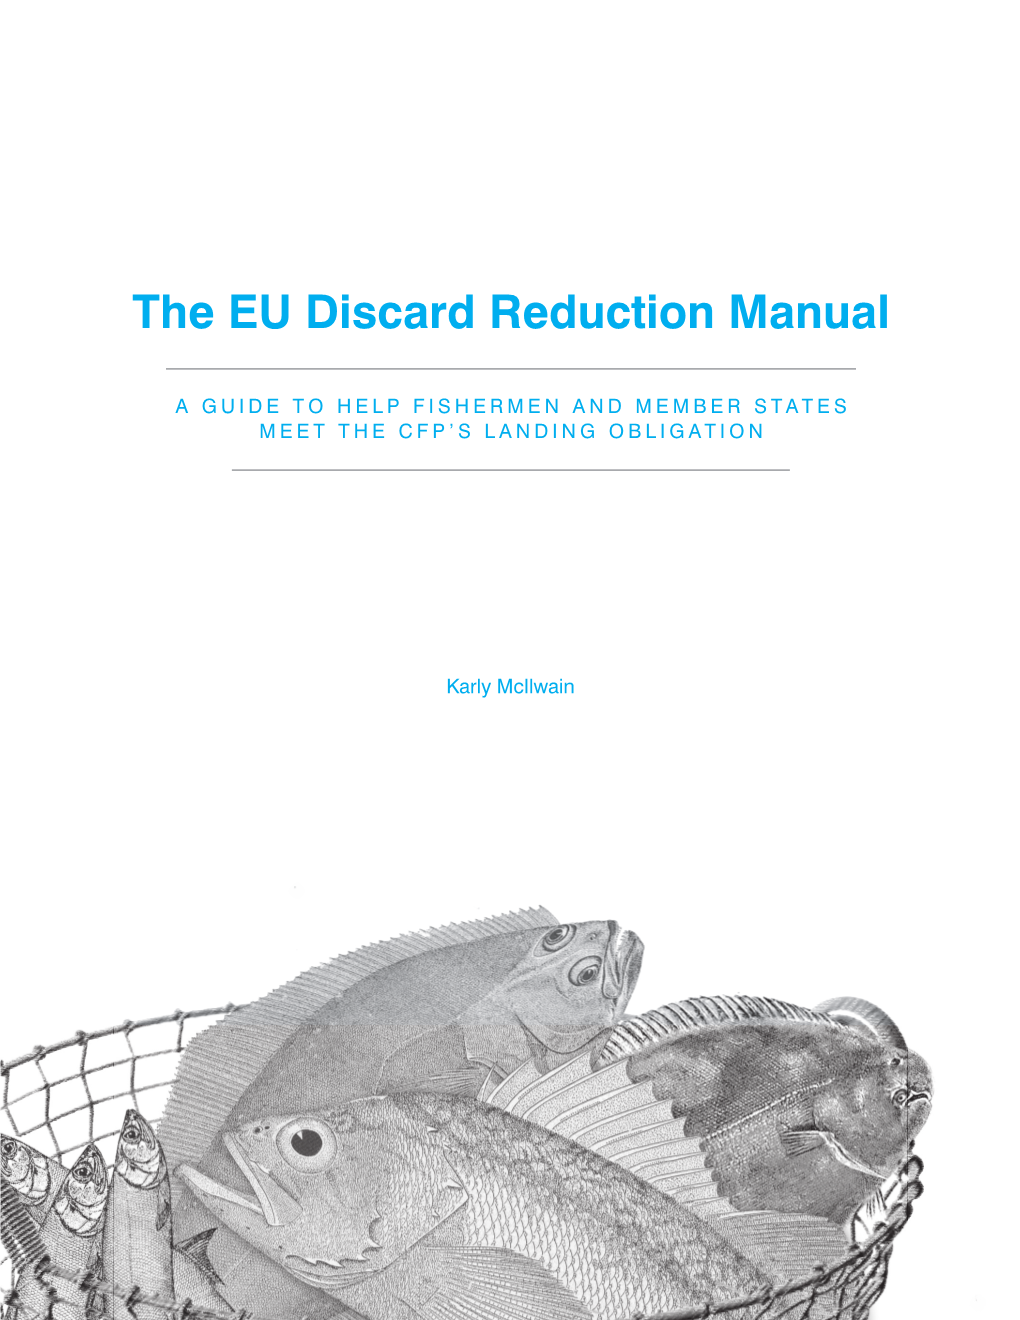 The EU Discard Reduction Manual